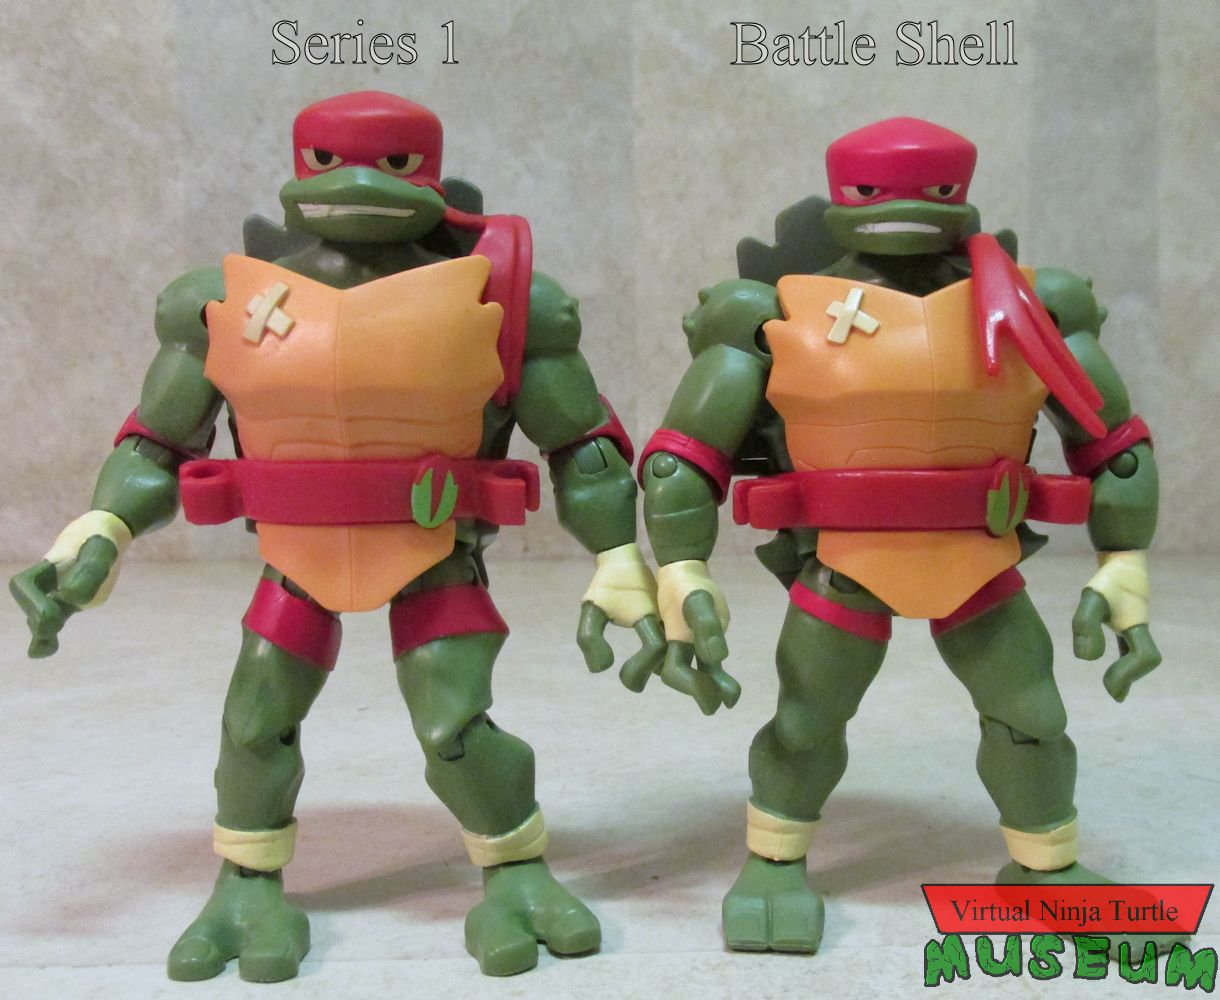 Battle Shell Raphael verses series one